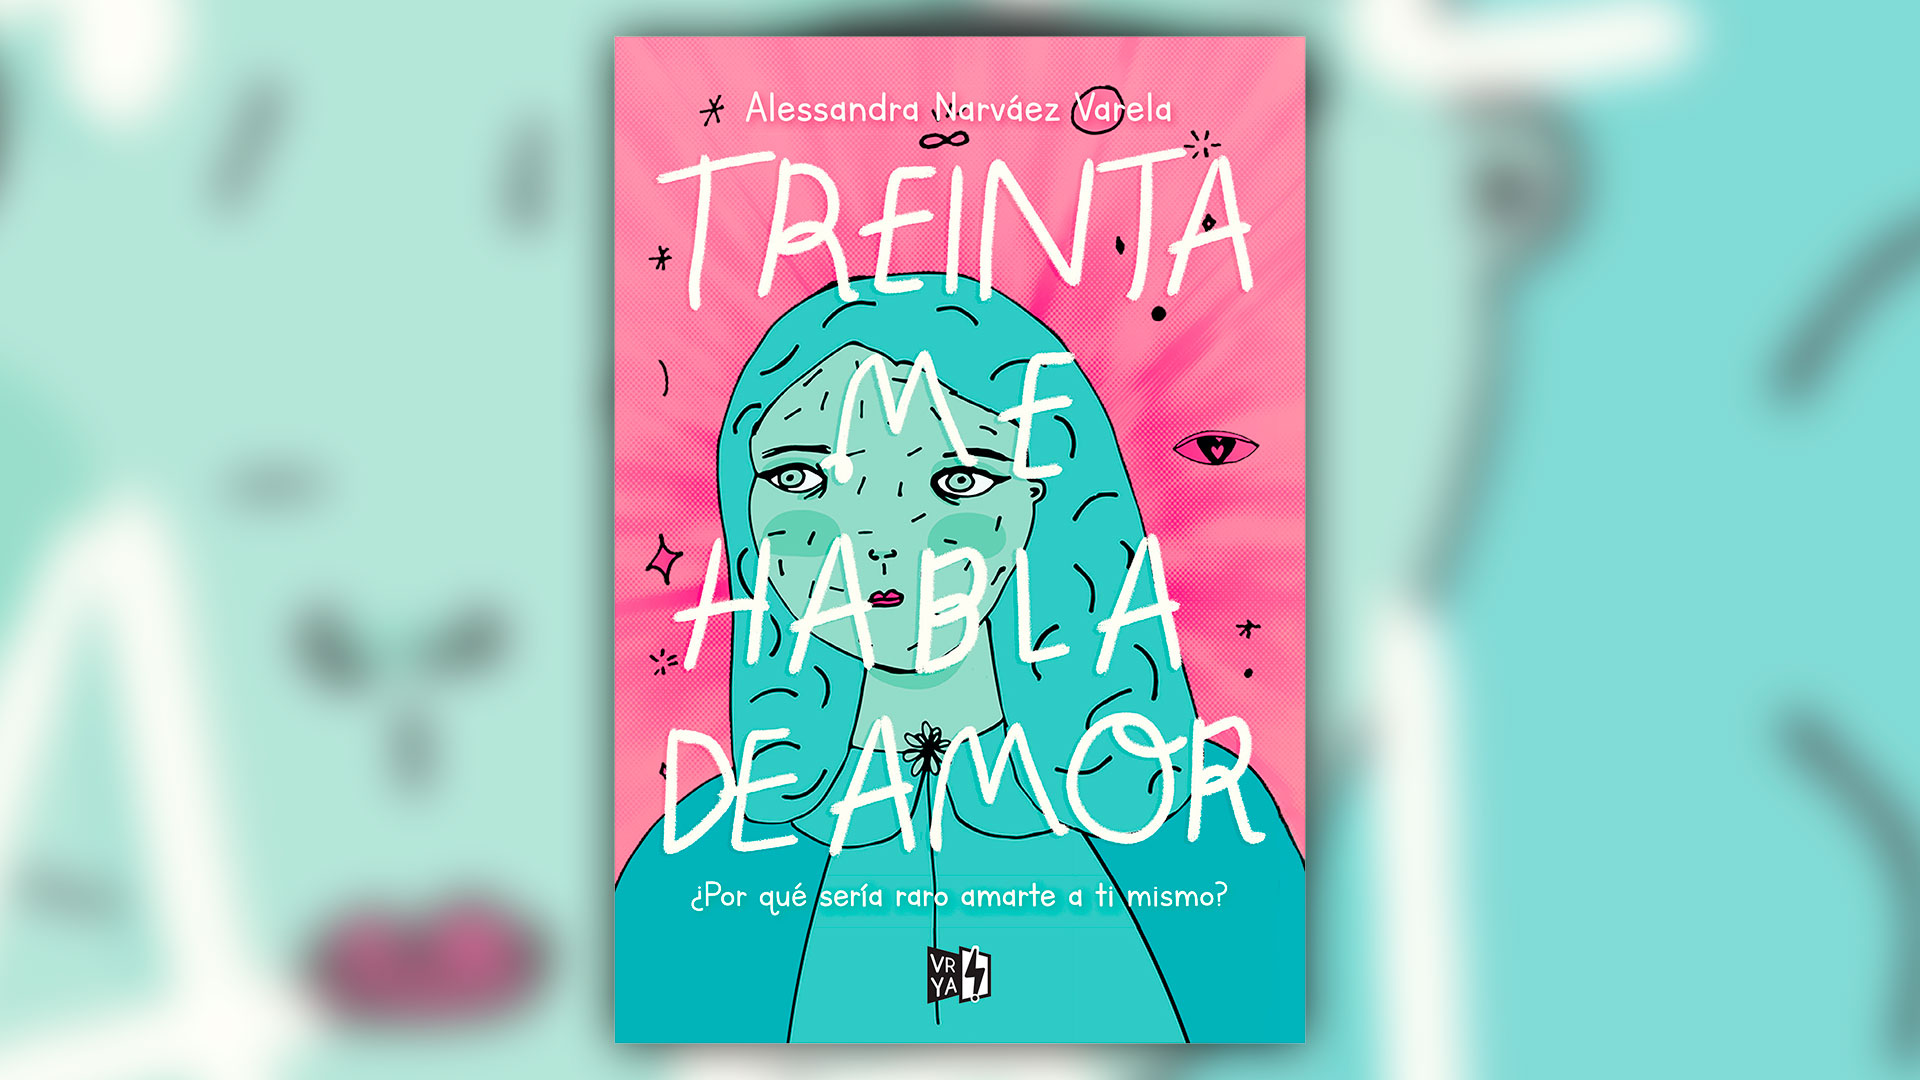 Portada de "Treinta me habla de amor", la primera novela en verso de Alessandra Narváez Varela, editada por V&R.